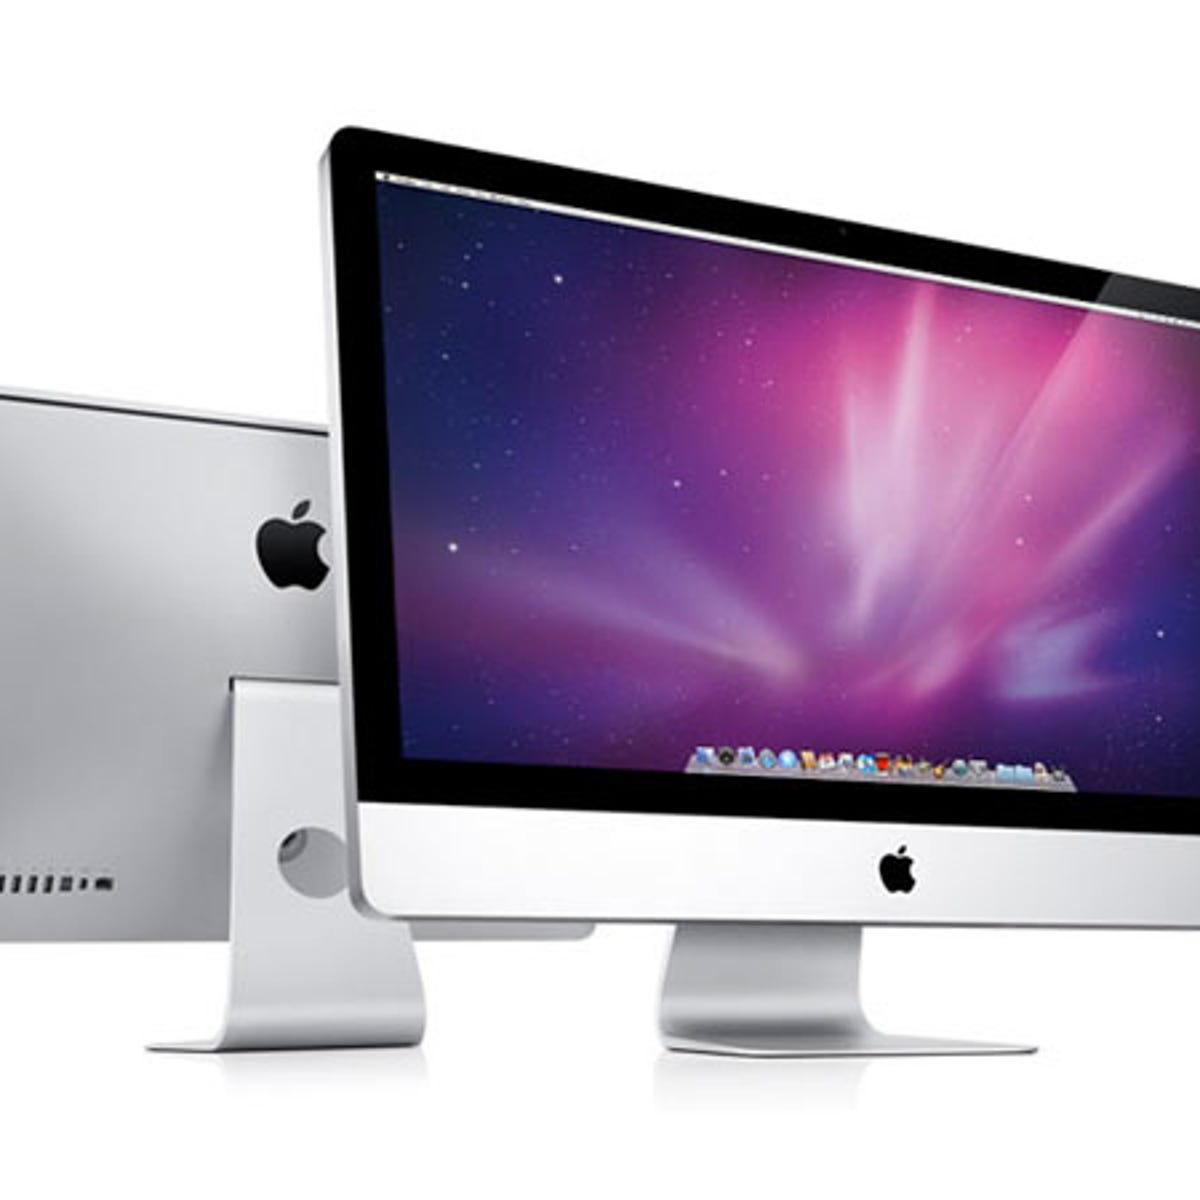 Apple iMac 27-inch 2010) review: Apple iMac 27-inch (July 2010) - CNET